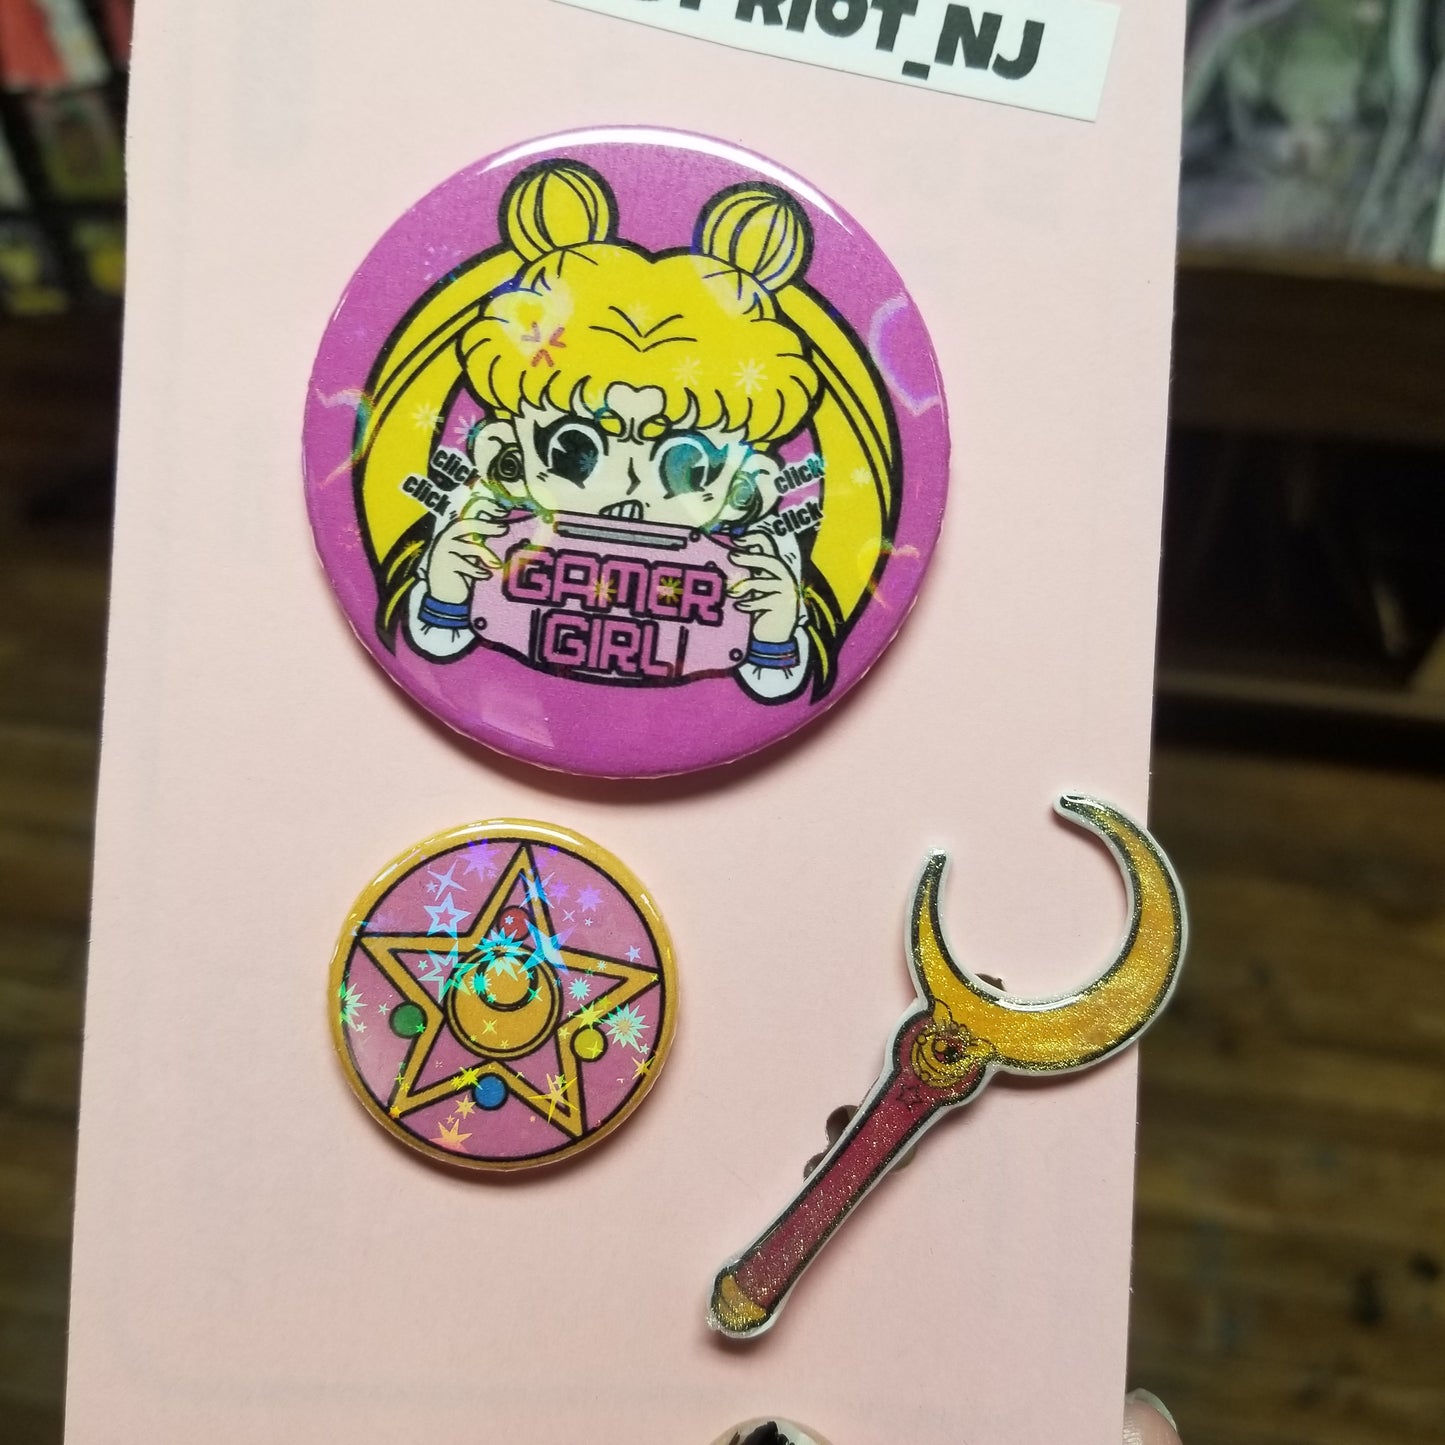 Gamer Girl / Sailor Wand/ Sailor Star PIN PACK by Riot NJ